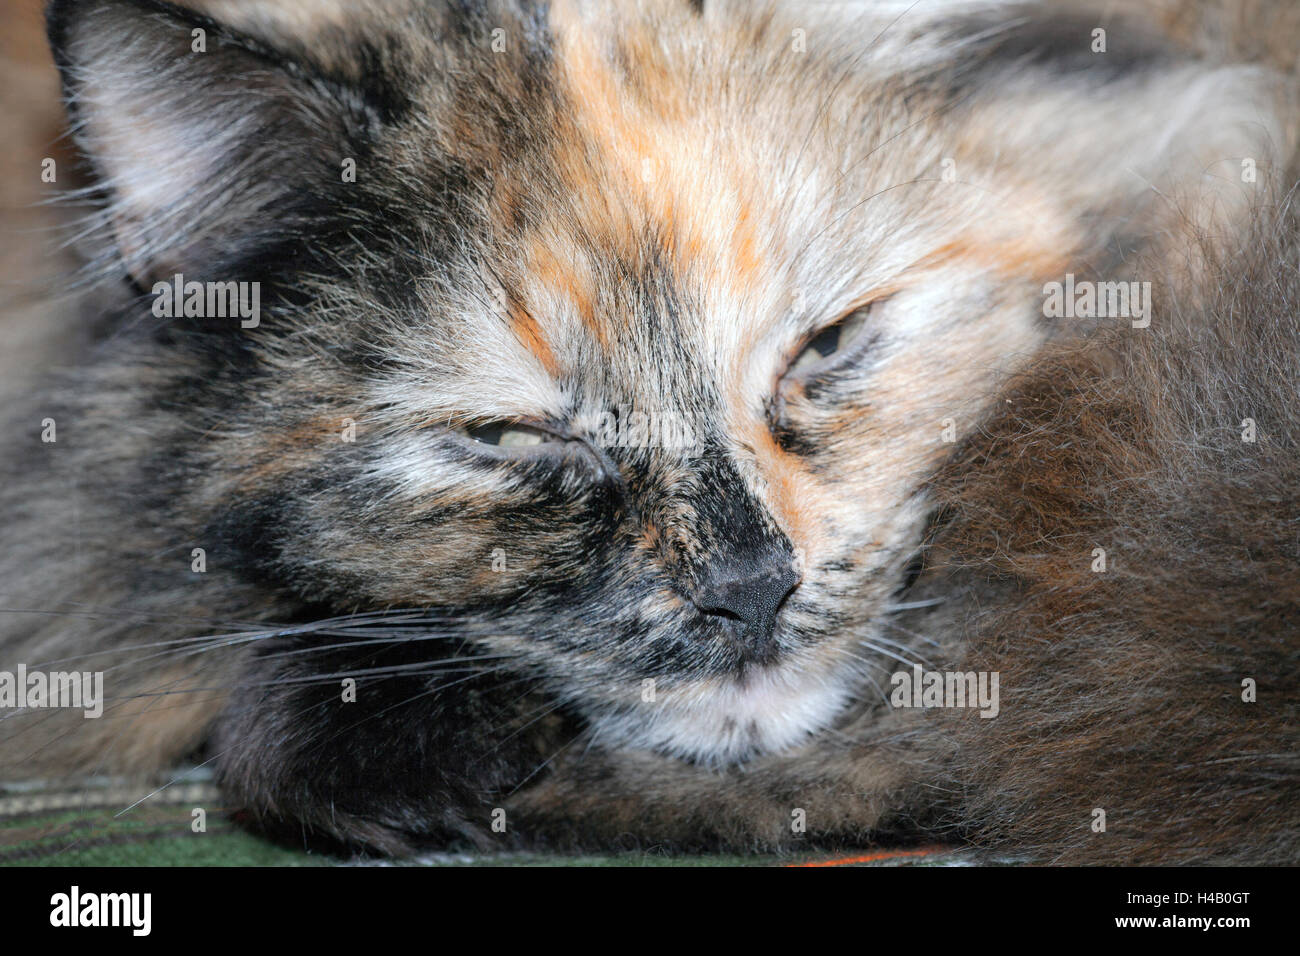 Portrait of a cat sleepy look Stock Photo